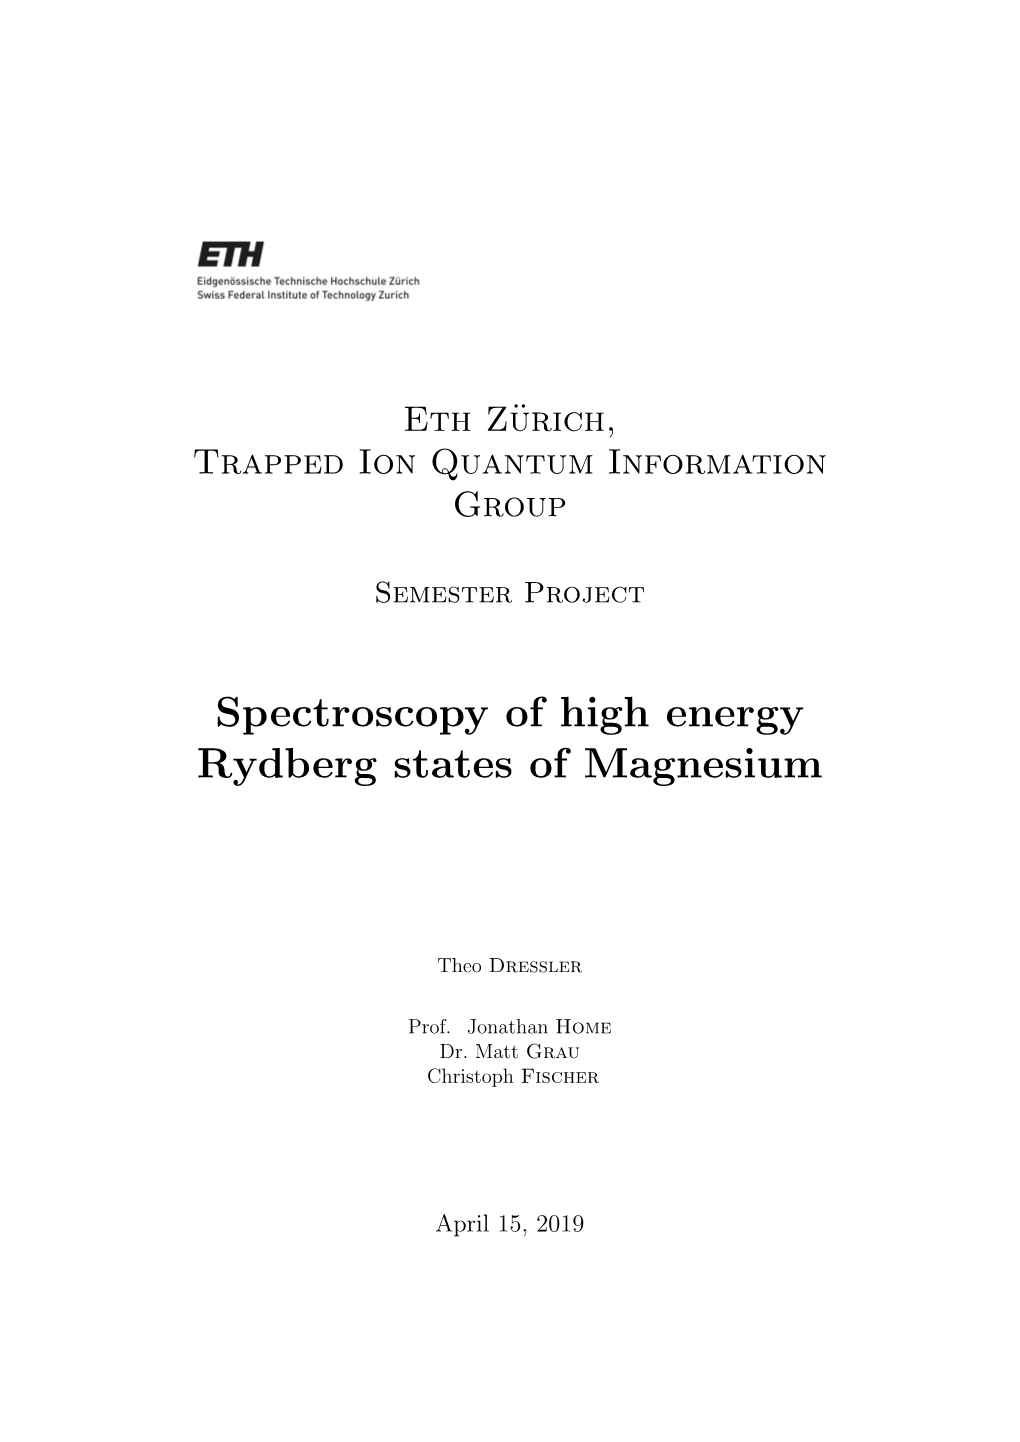 Spectroscopy of High Energy Rydberg States of Magnesium